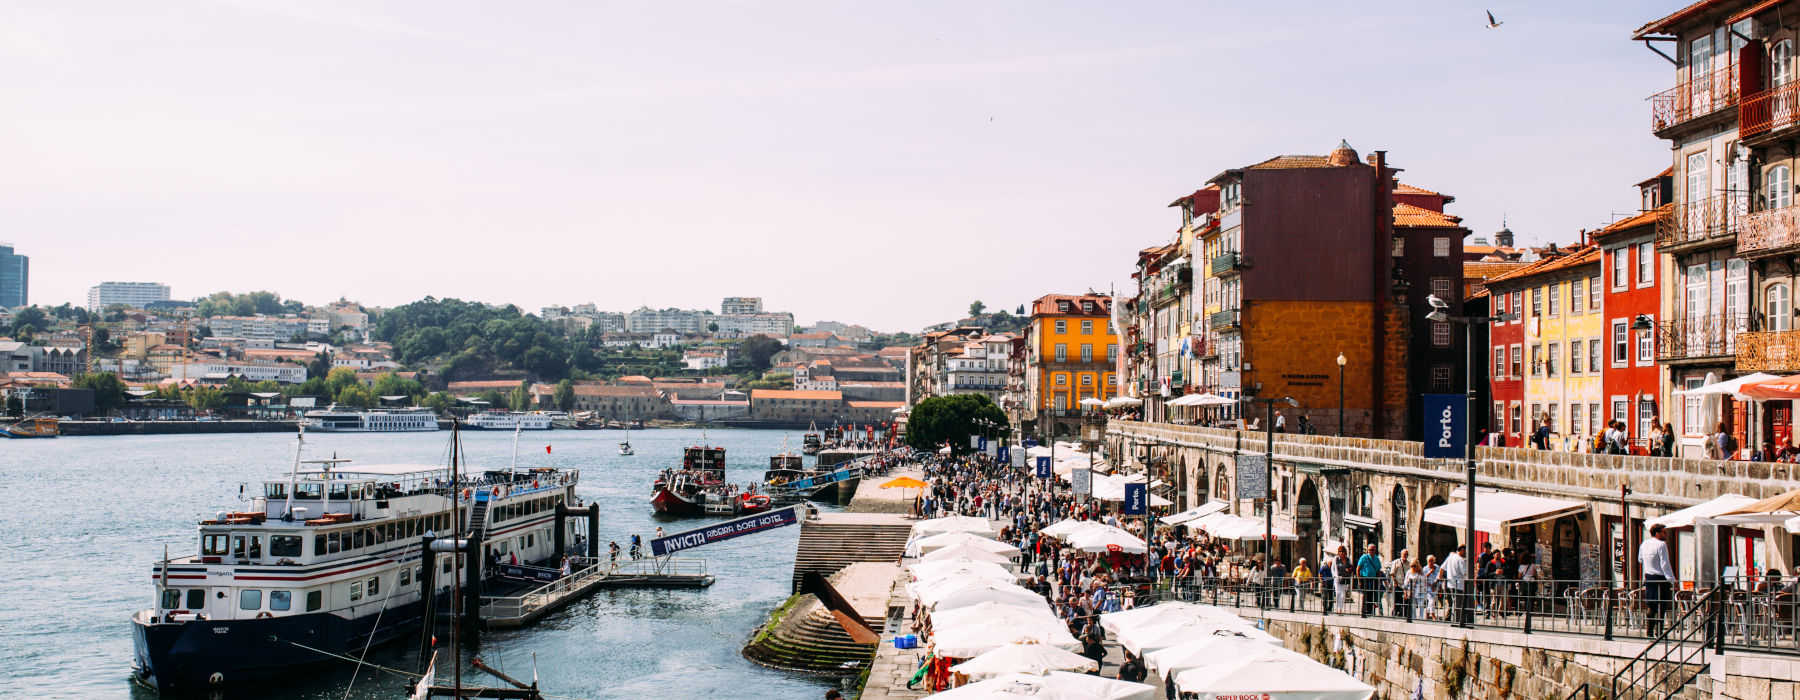 Porto & Northern Portugal<br class="hidden-md hidden-lg" /> Holidays